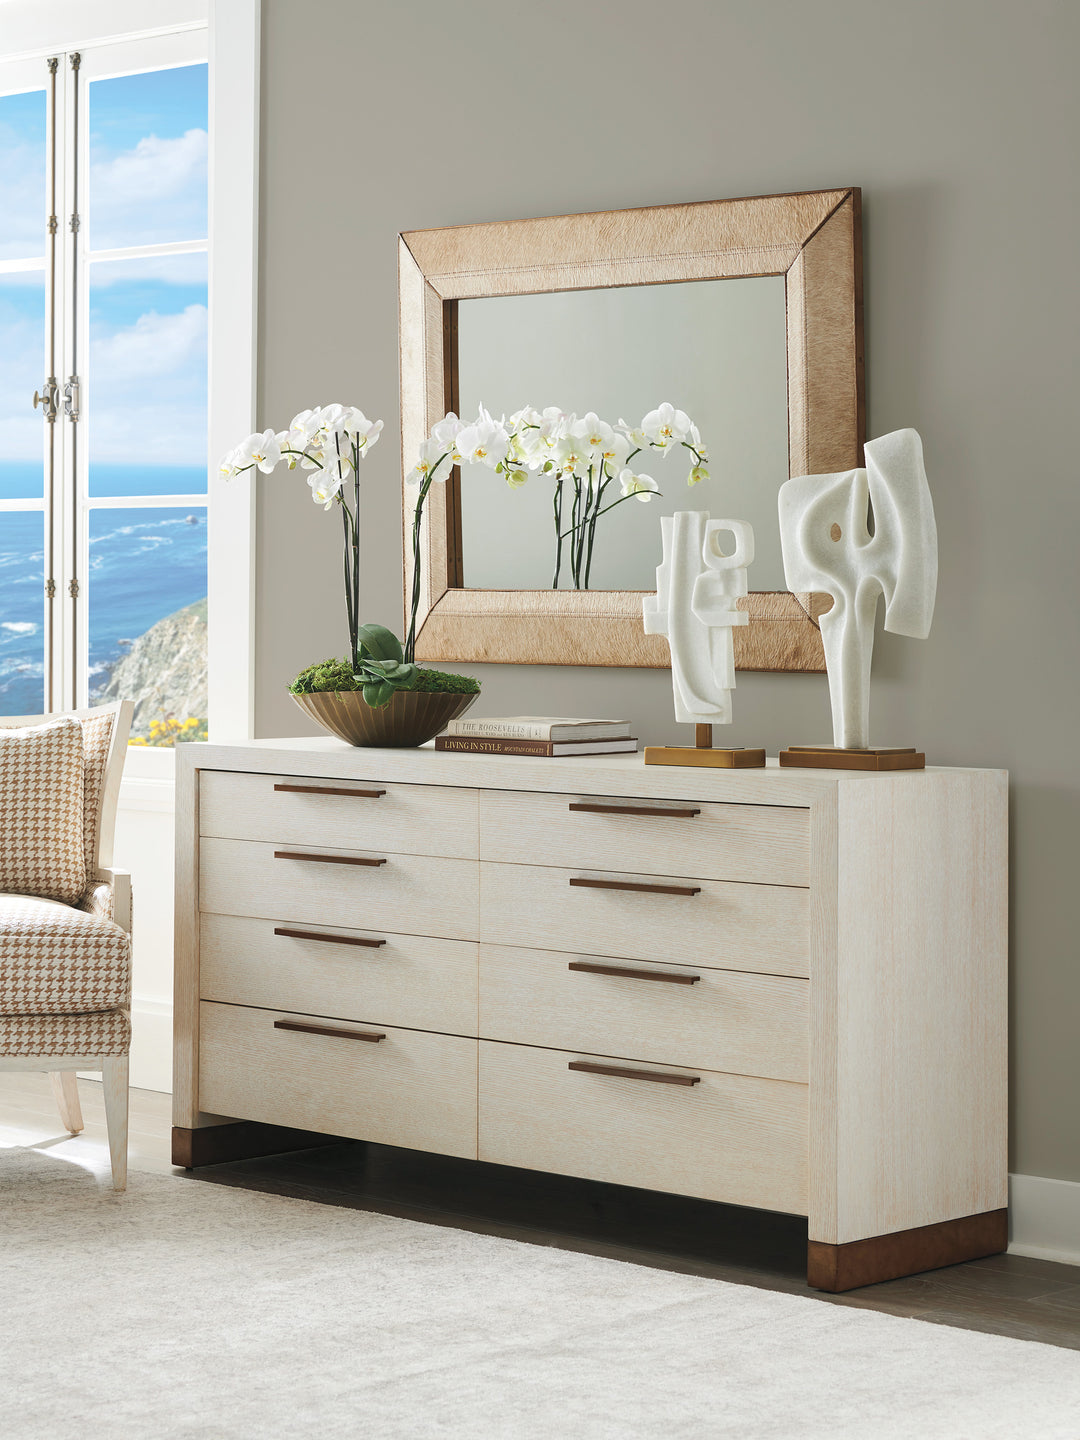 American Home Furniture | Barclay Butera  - Carmel Asilomar Rectangular Mirror